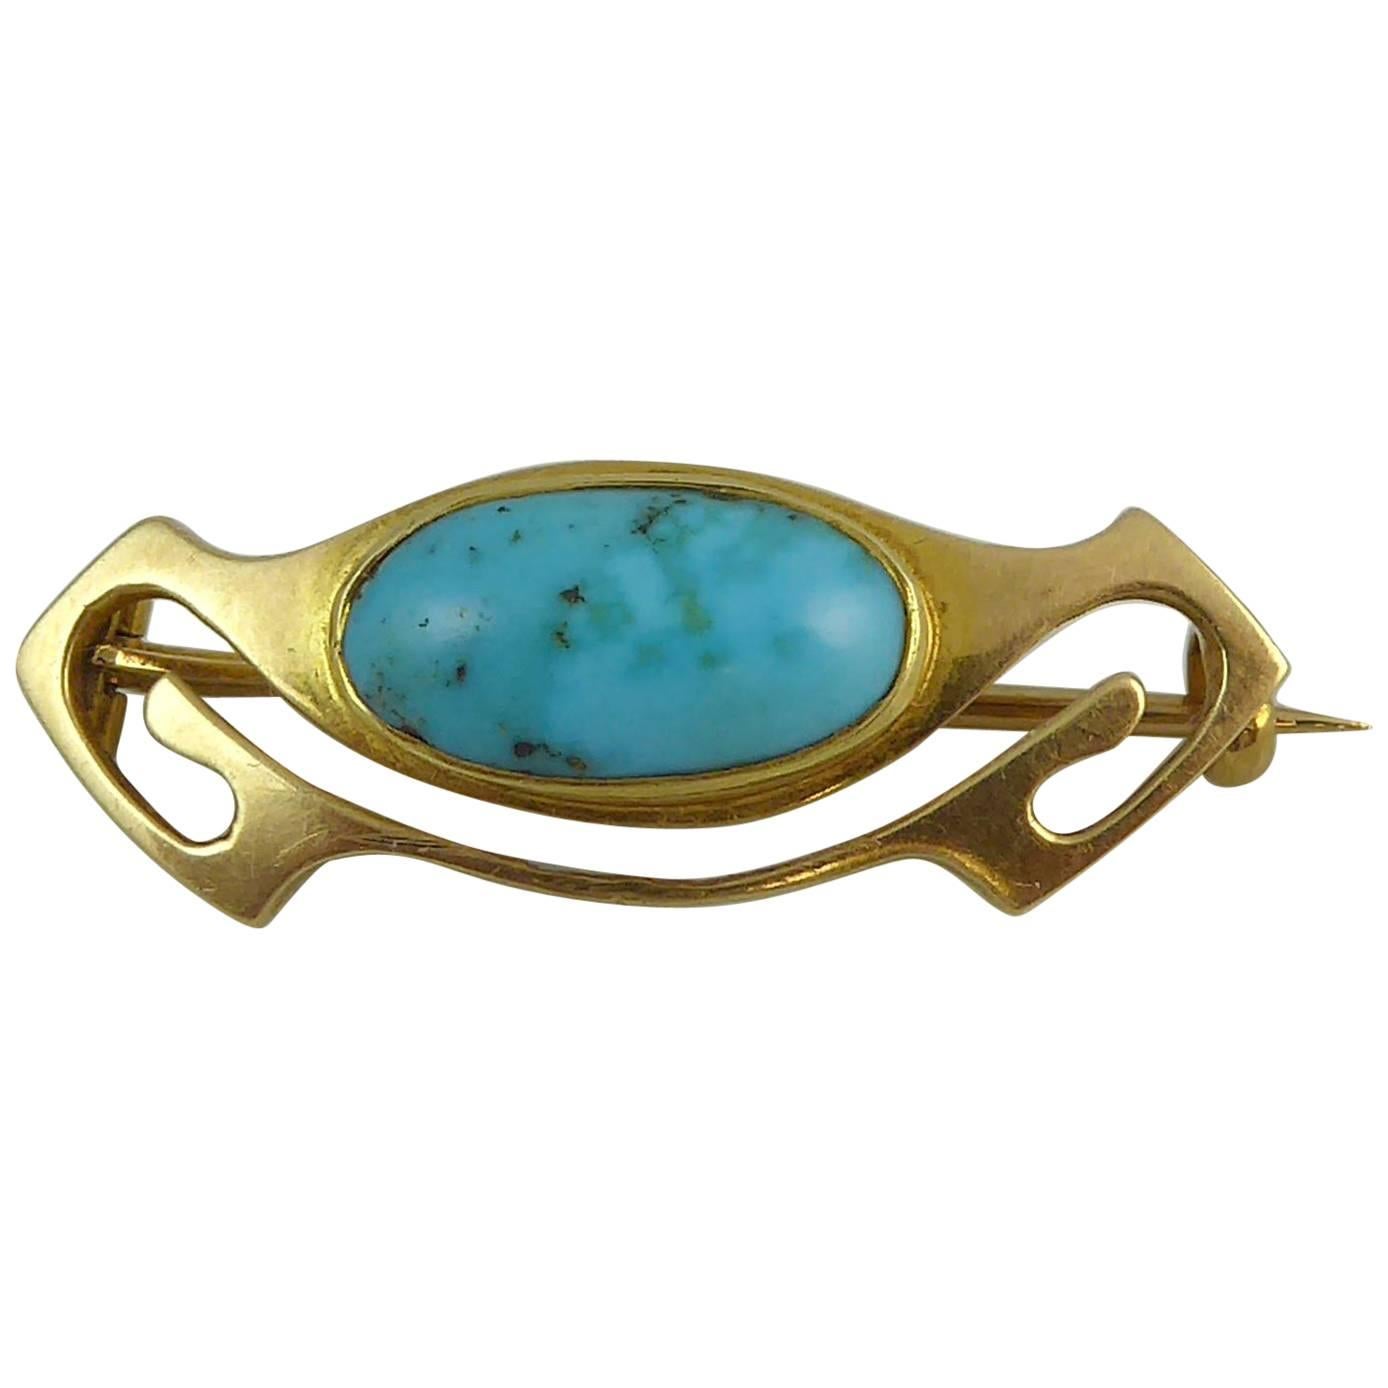 Murrle Bennett & Co. Art Nouveau Brooch, Turquoise, 15 Carat Gold